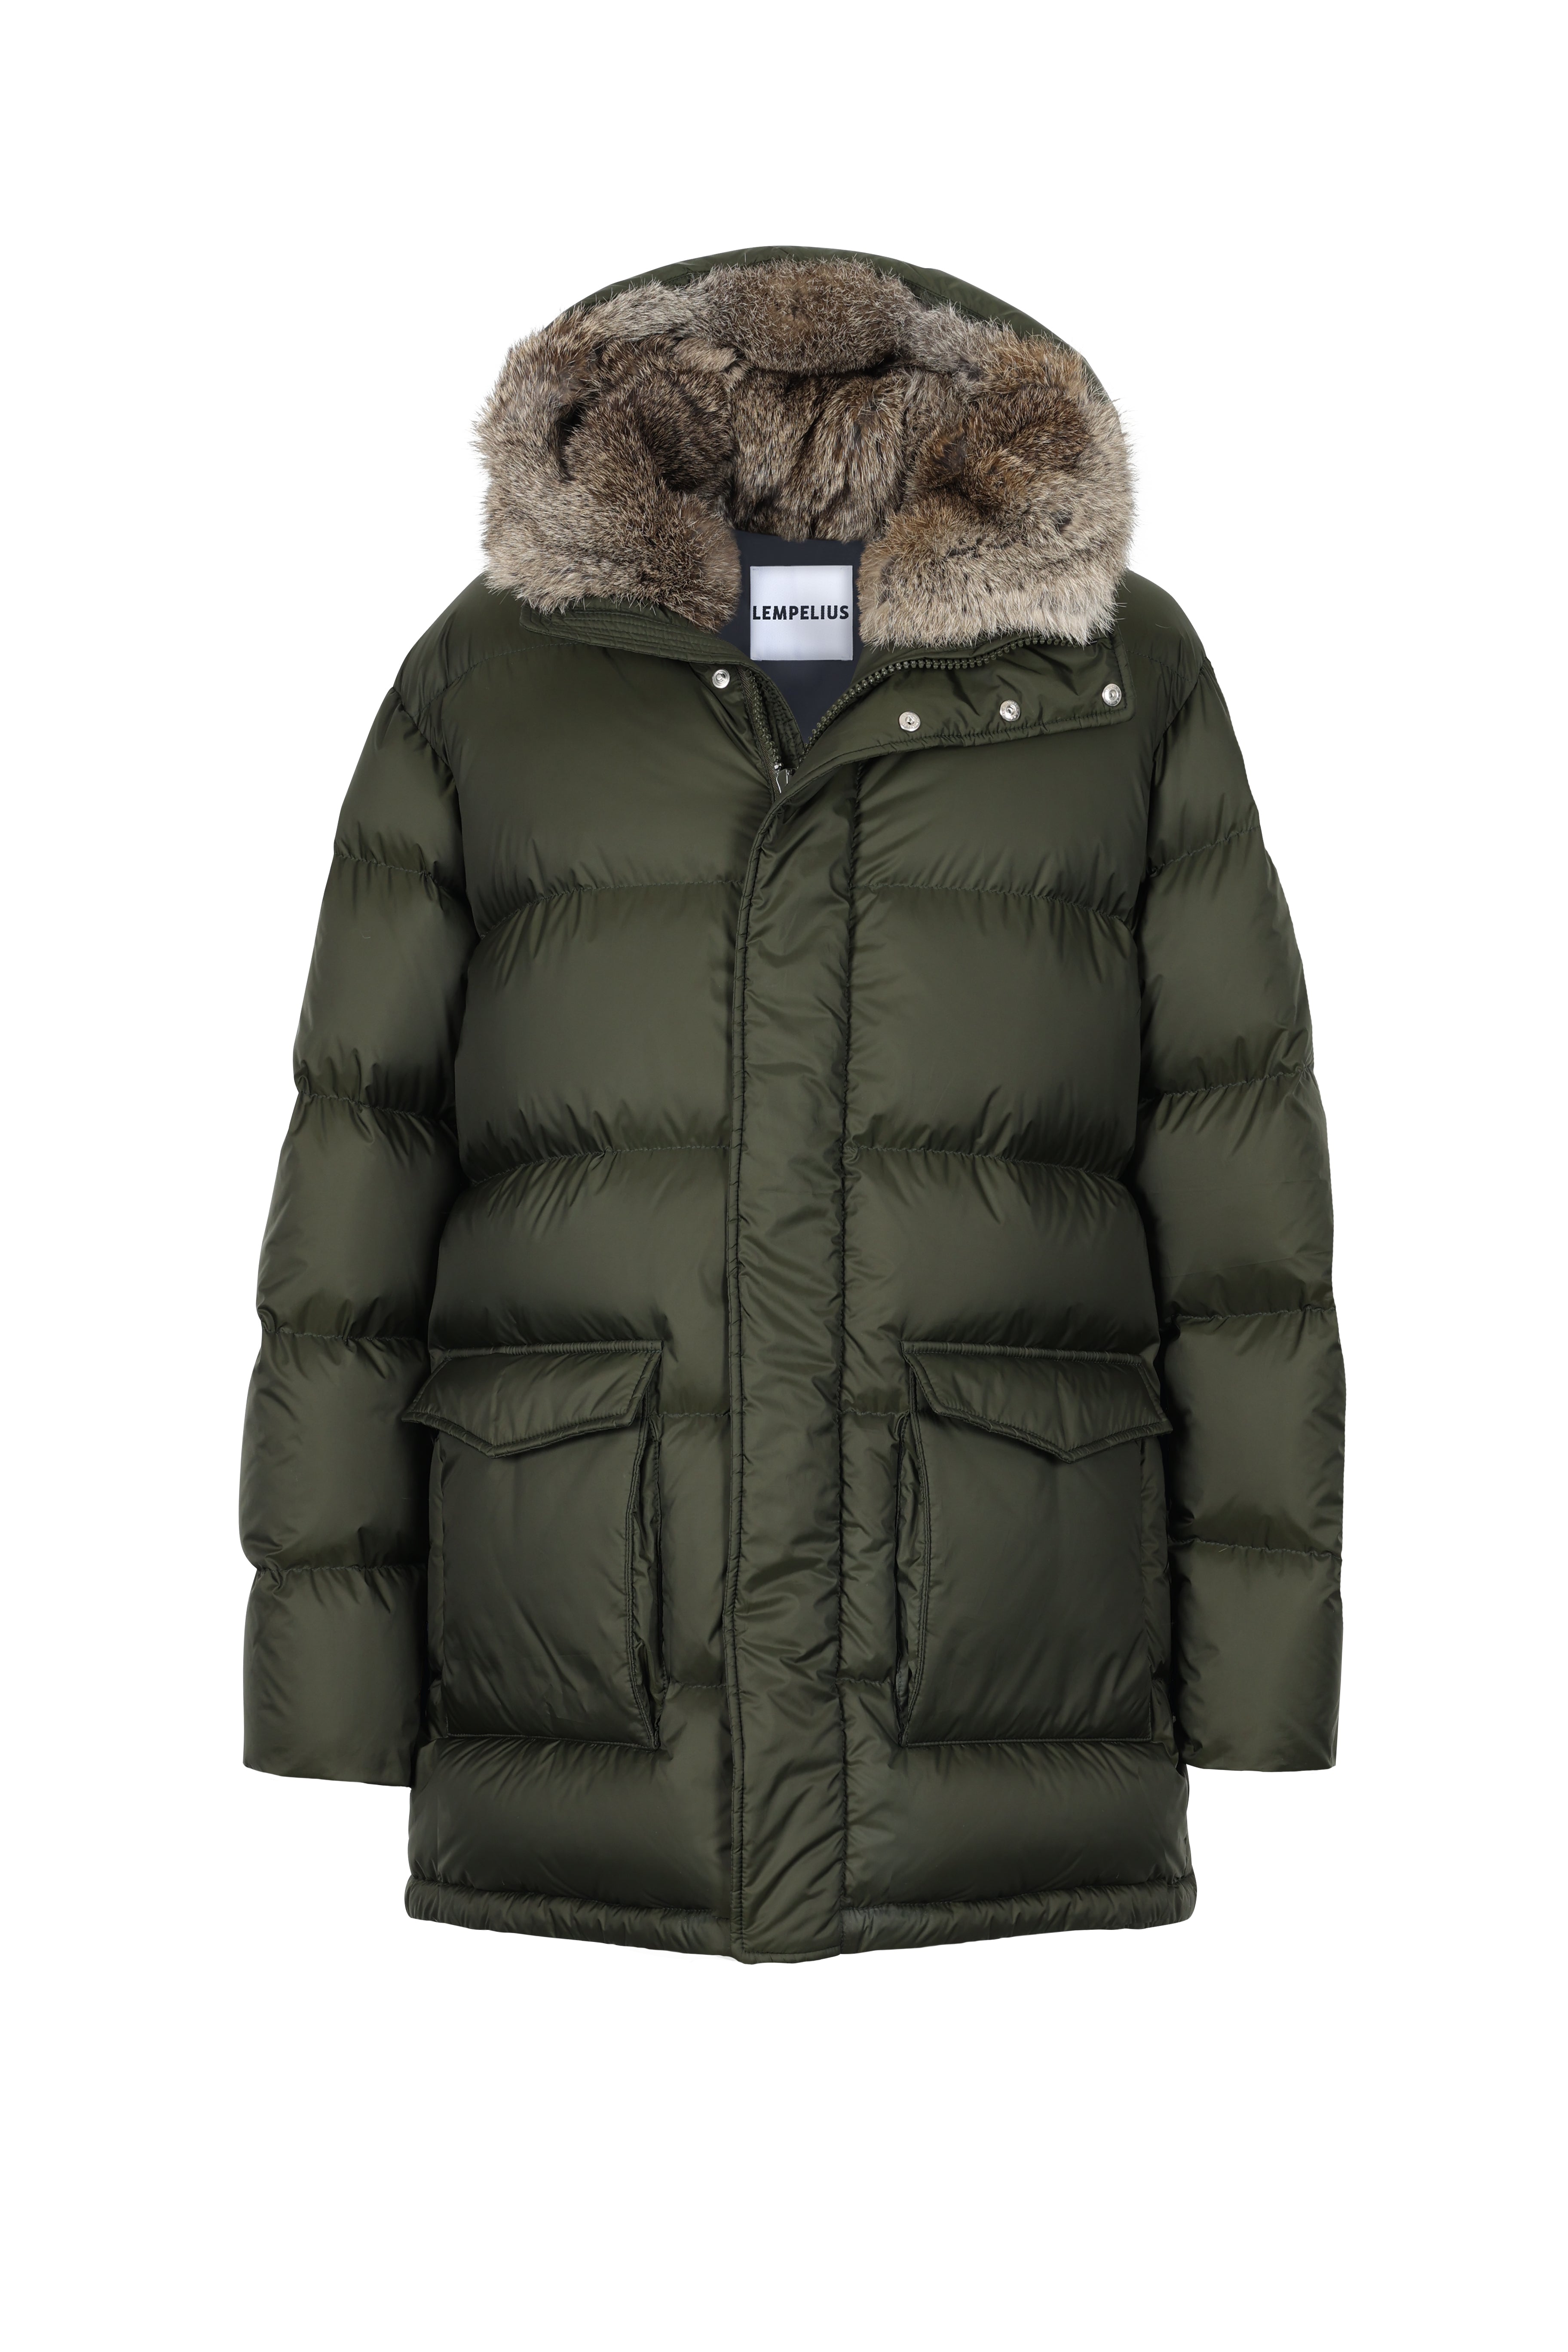 Lempelius Down coat with fur hood in pine green